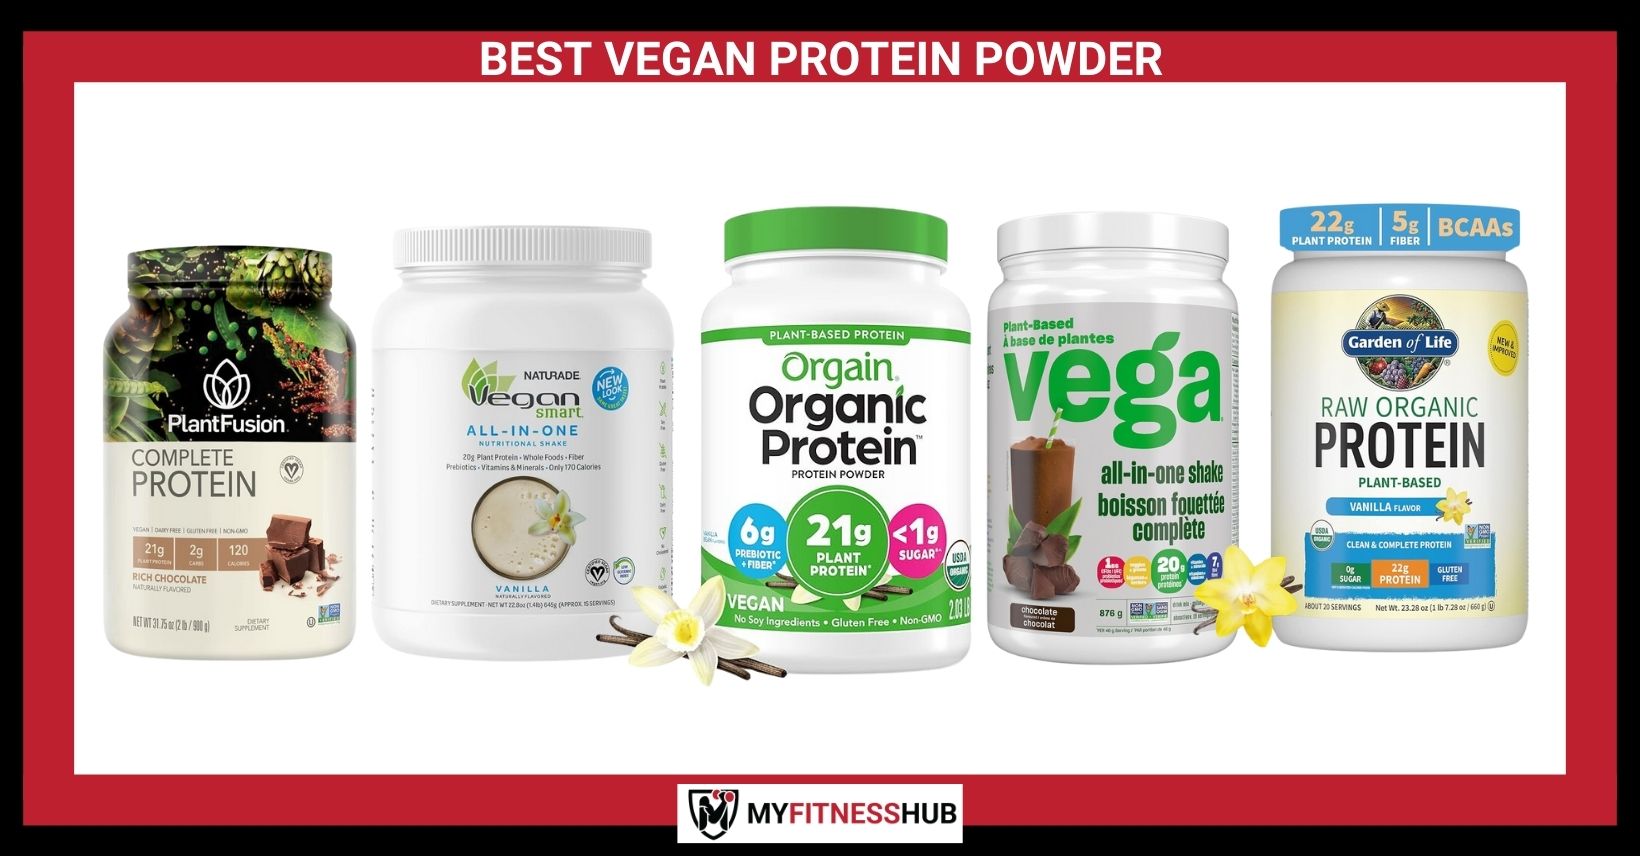 vegan-protein-powder-1640x856.jpg